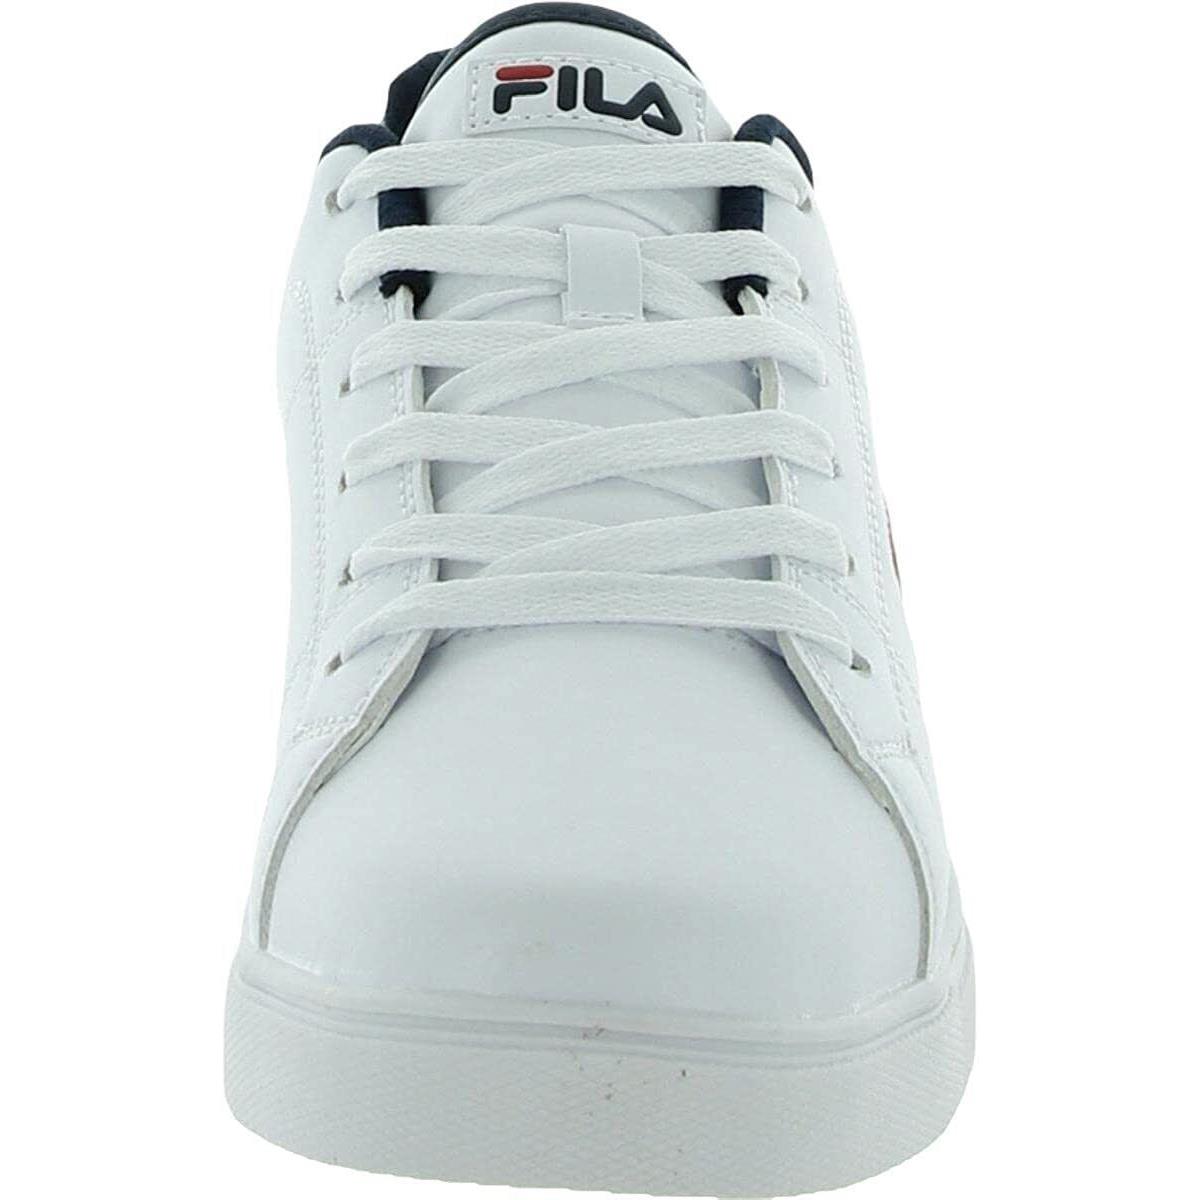 Man Fila Charleston Lifestyle Low Top Fashion Sneakers 875-125 Color White